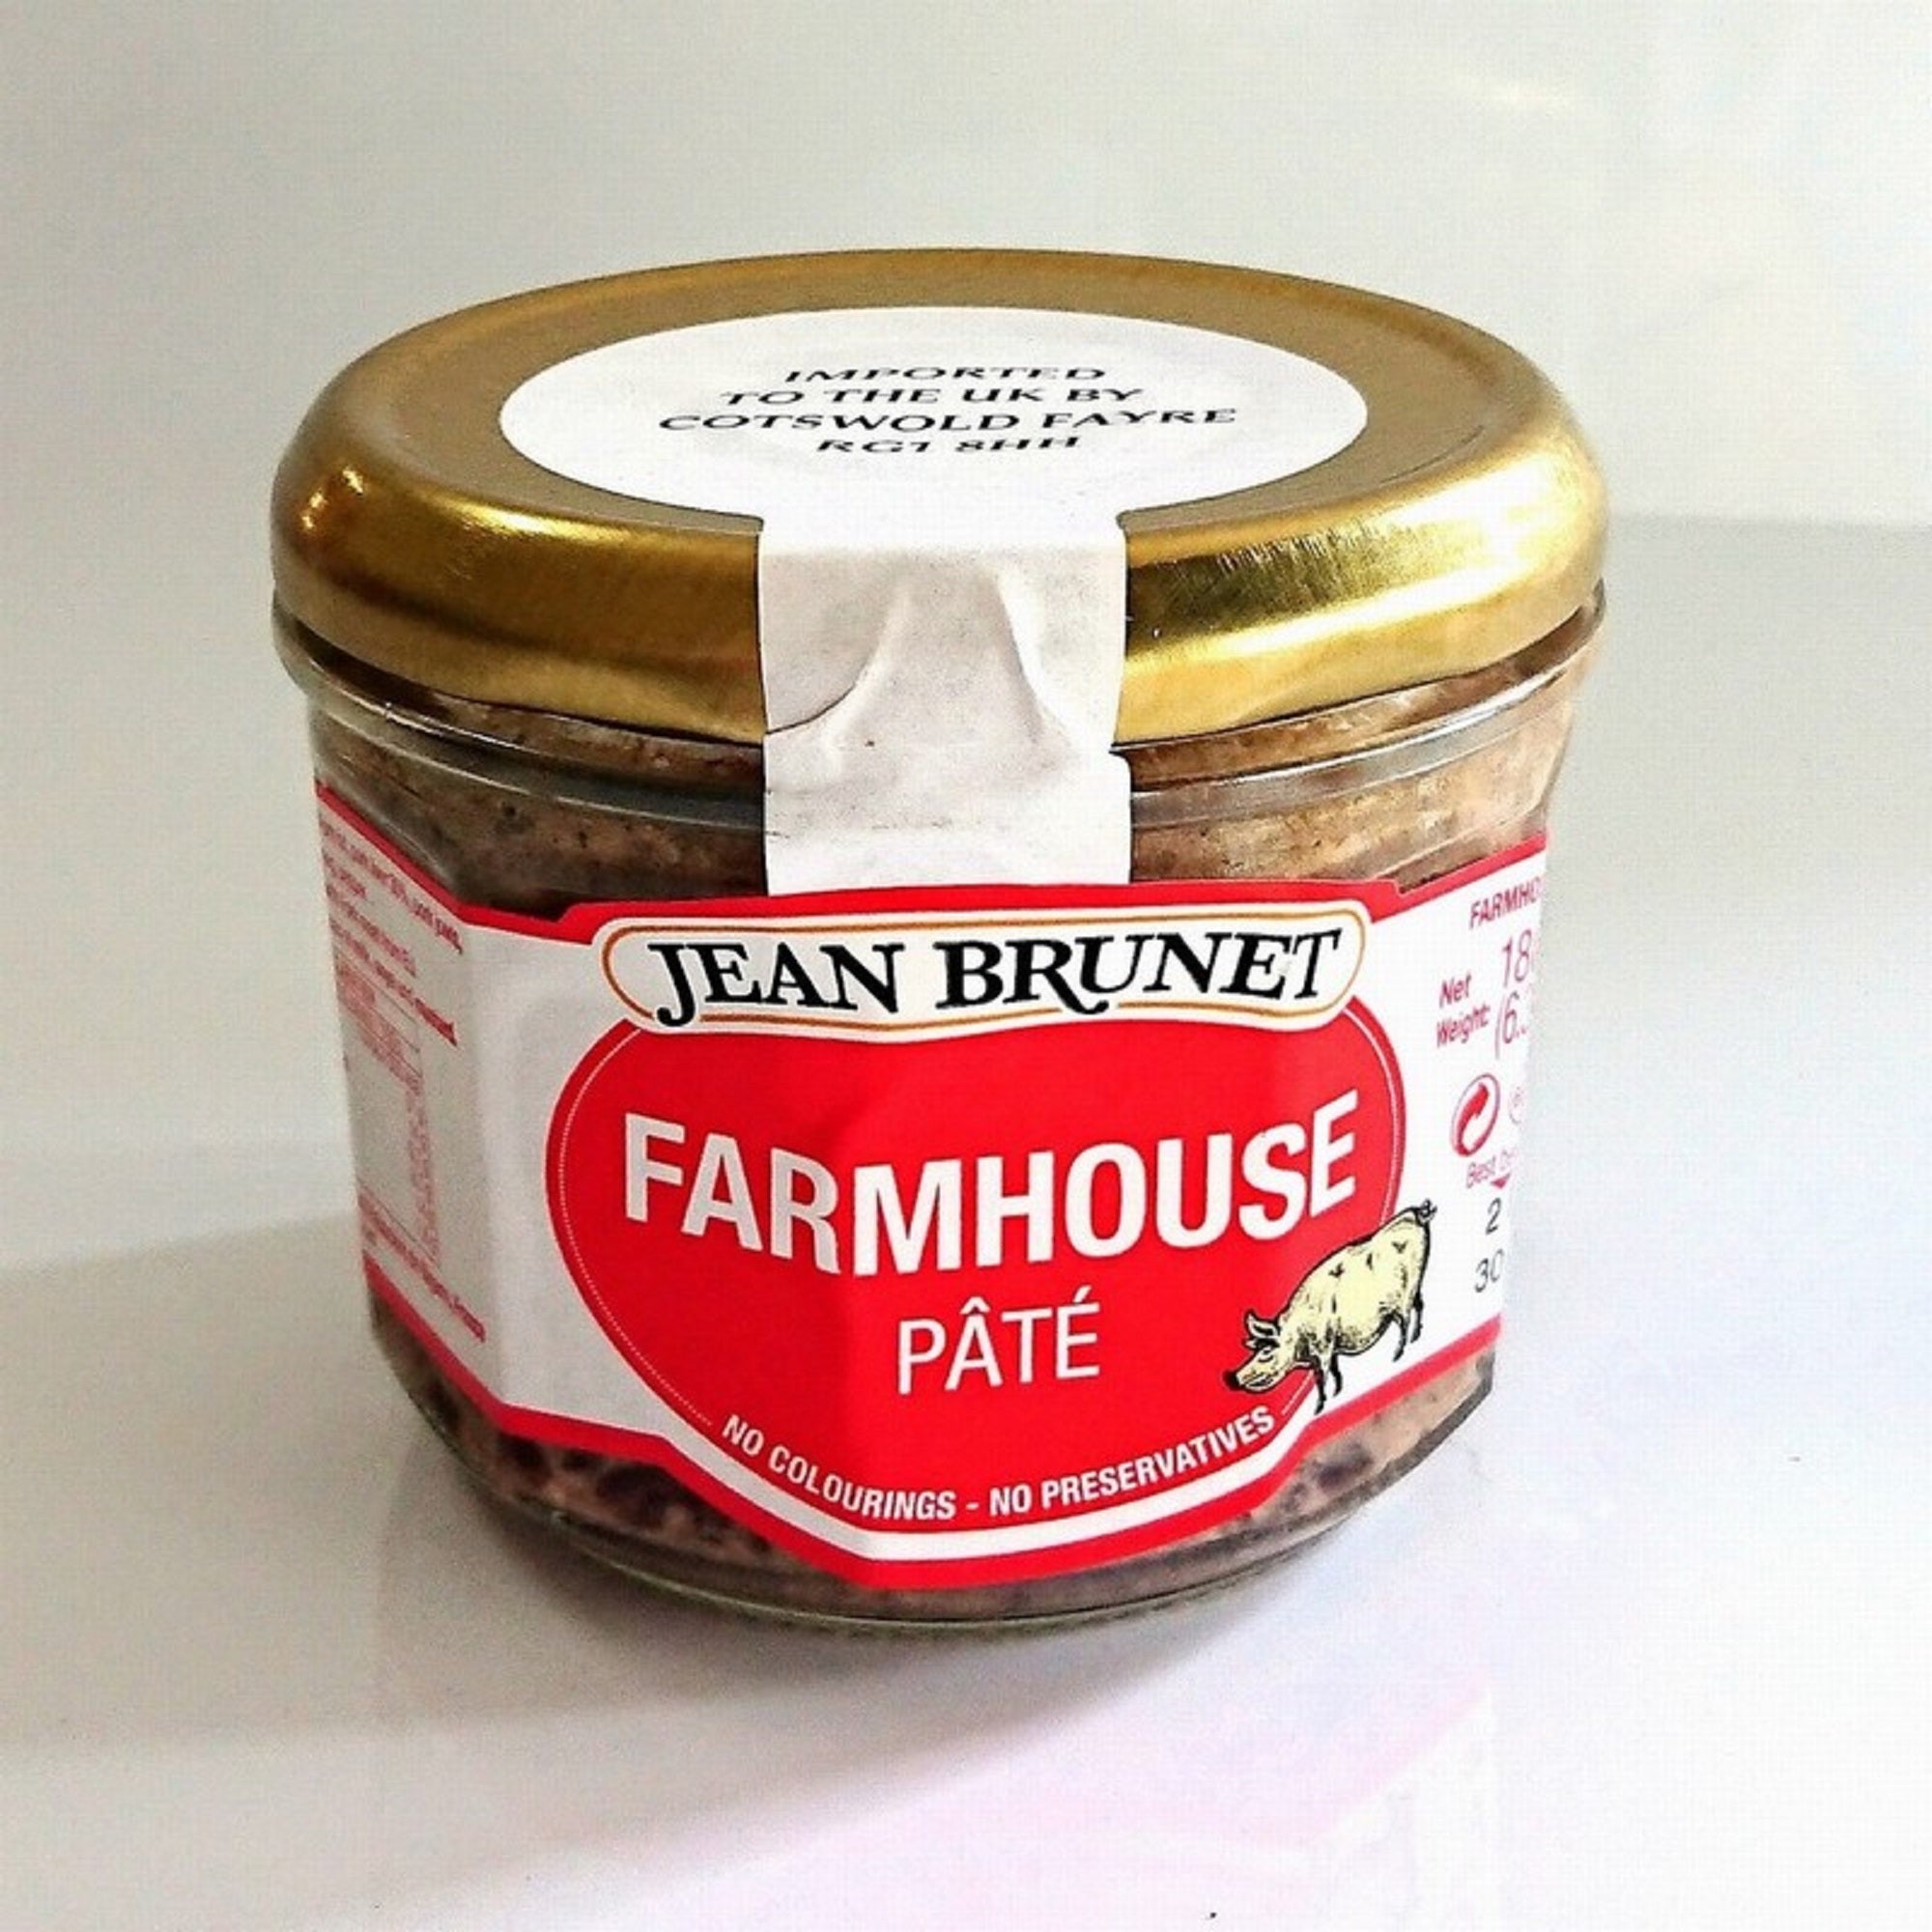 JEAN BRUNET FARMHOUSE PATE (180g)